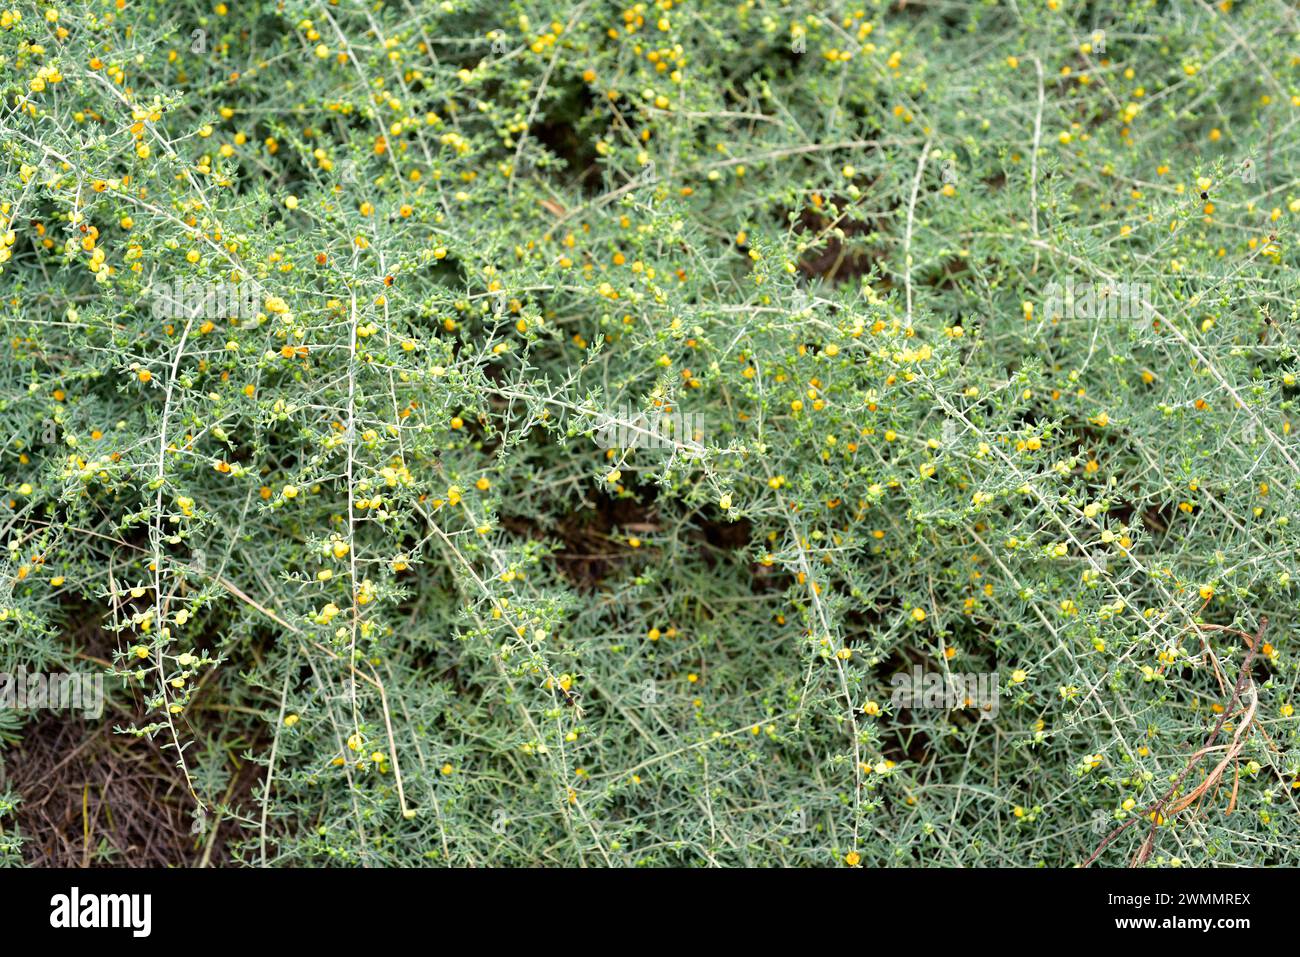 Barrier saltbush or ruby saltbush (Enchylaena tomentosa) is an evergreen shrub native to Australia. Stock Photo